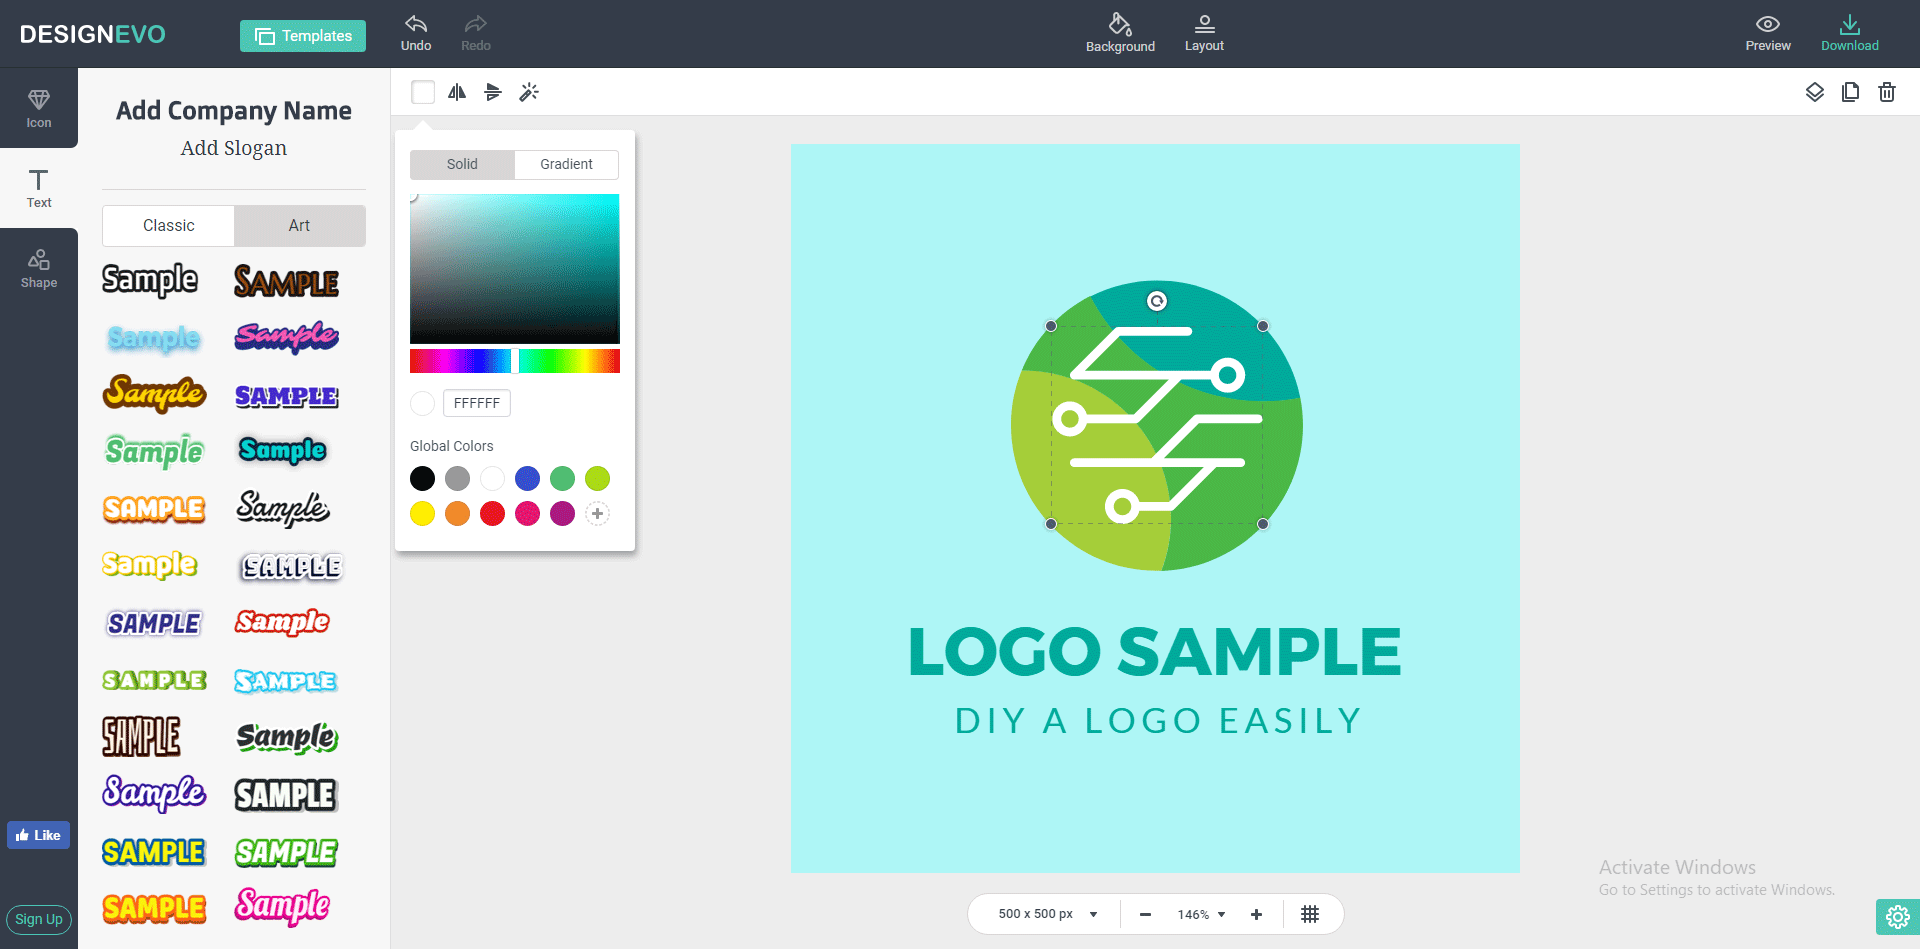 Design Evo website